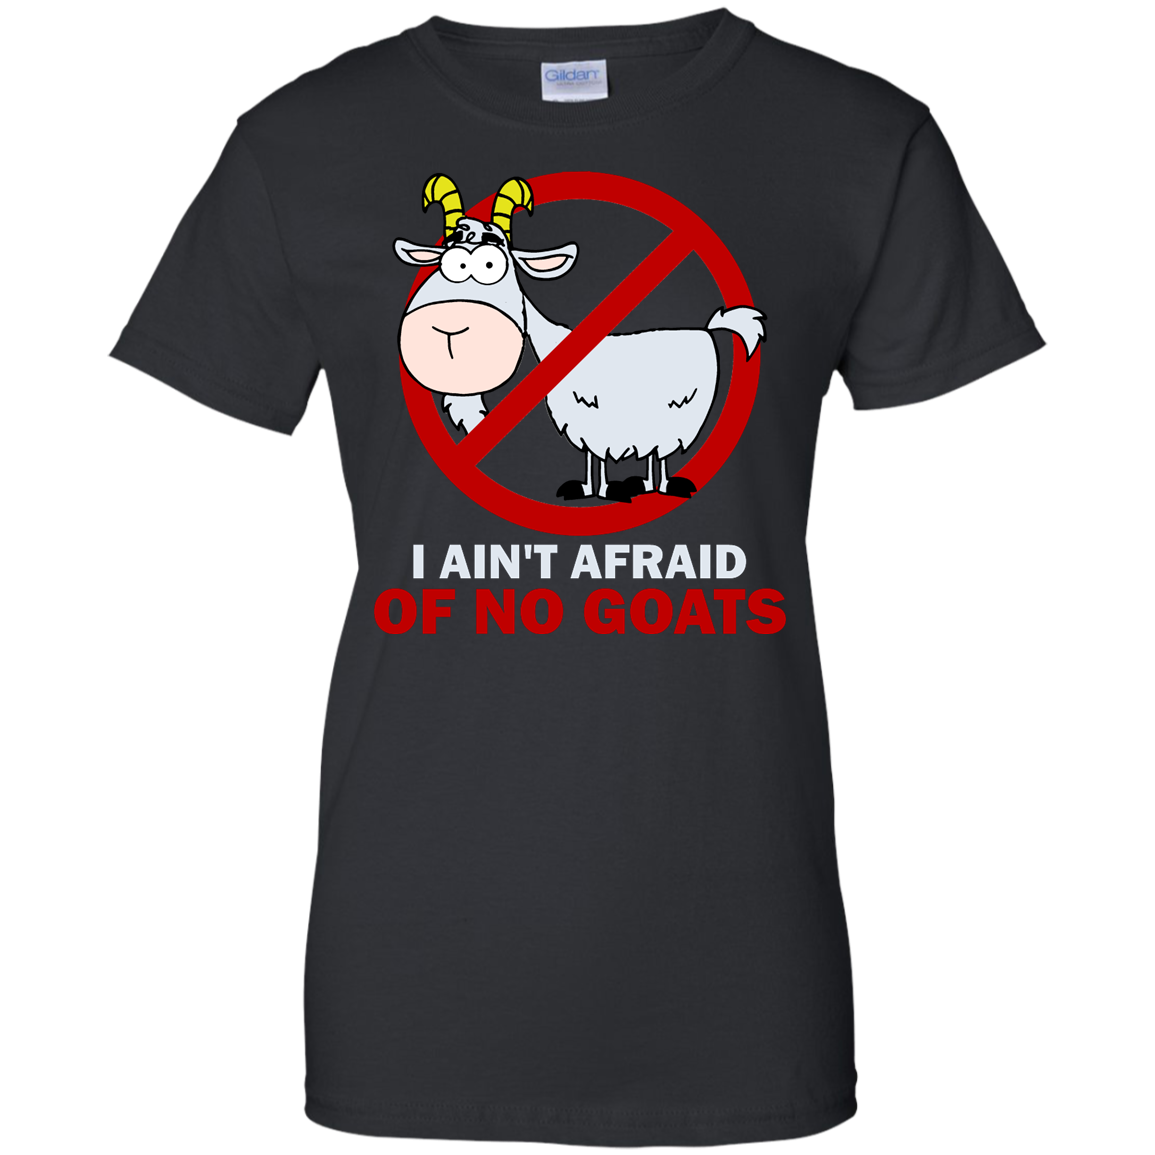 I Ain't Afraid of No Goats Shirt, Hoodie, Tank - ifrogtees